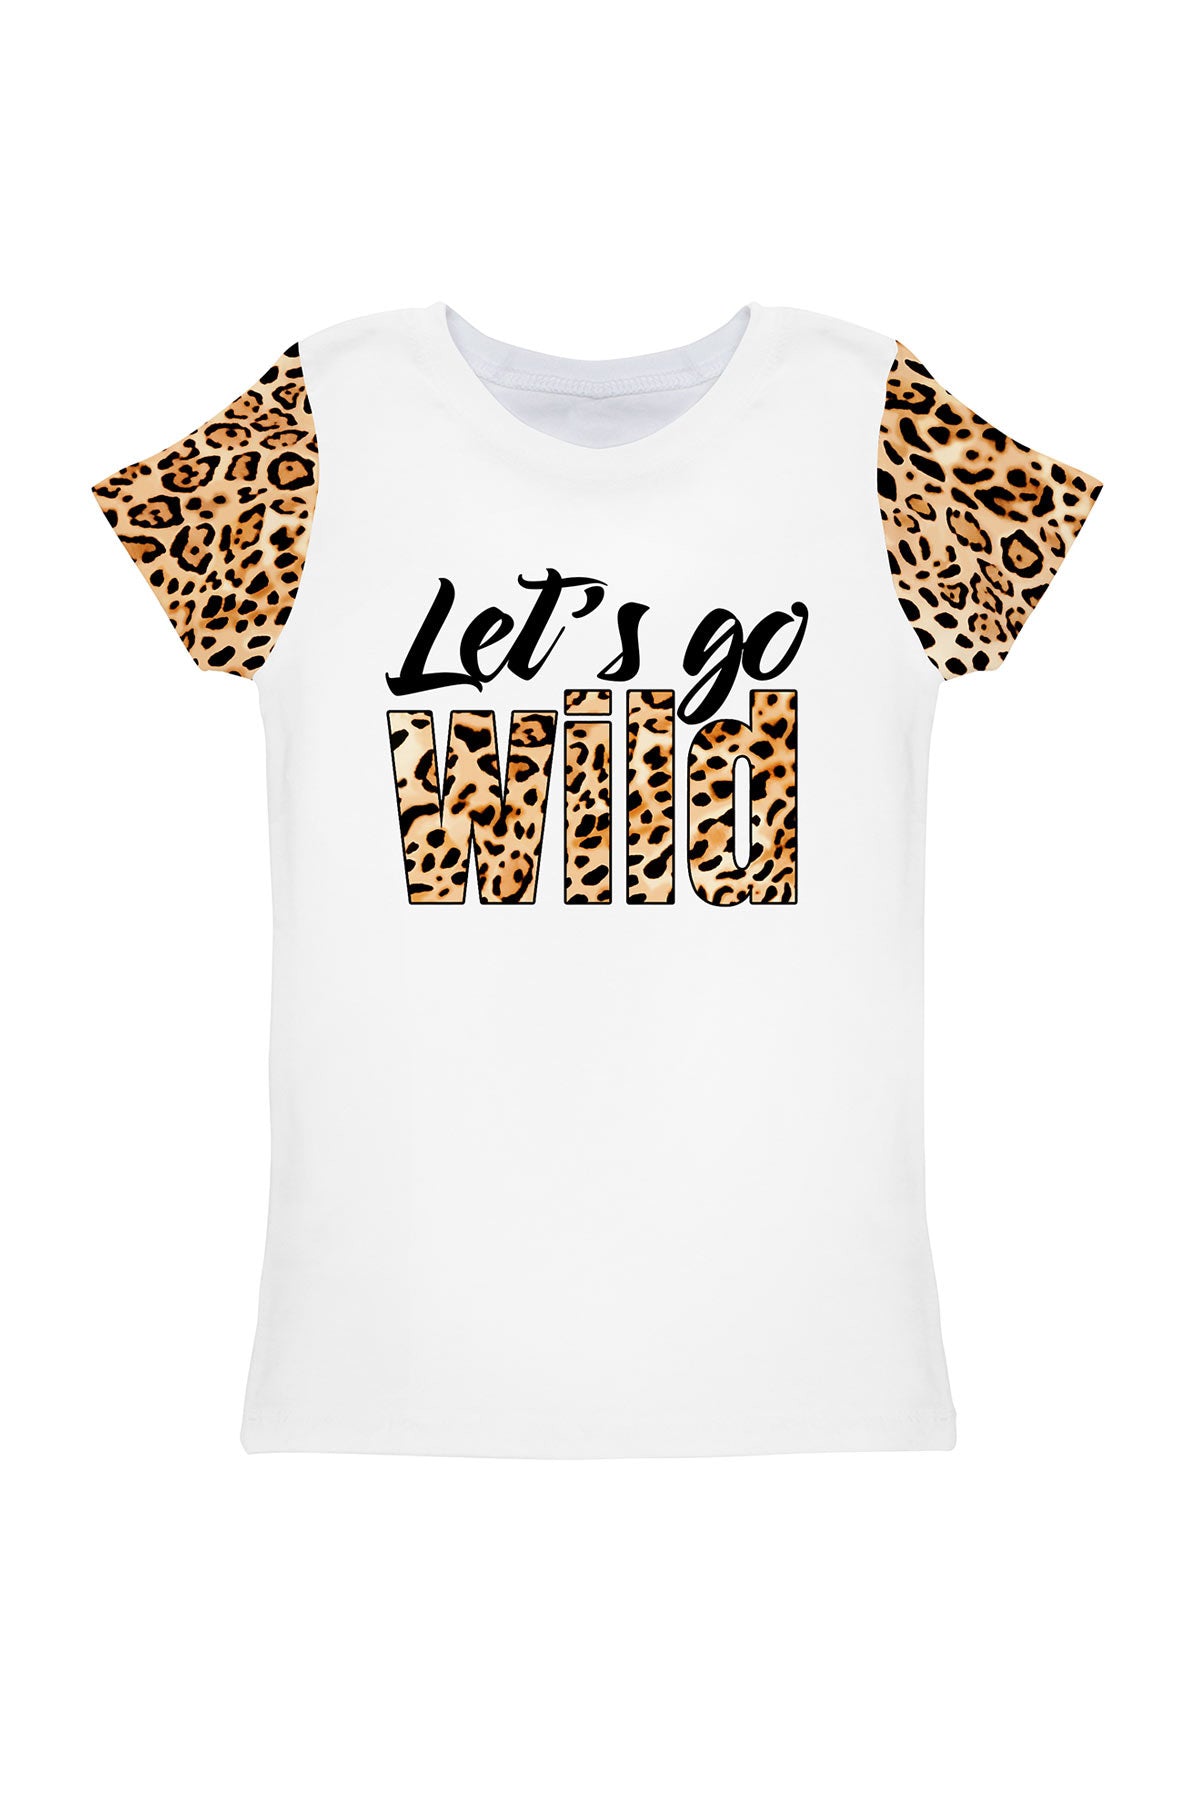 Let's Go Wild Zoe White Designer Quote Leopard Print T-Shirt - Kids - Pineapple Clothing